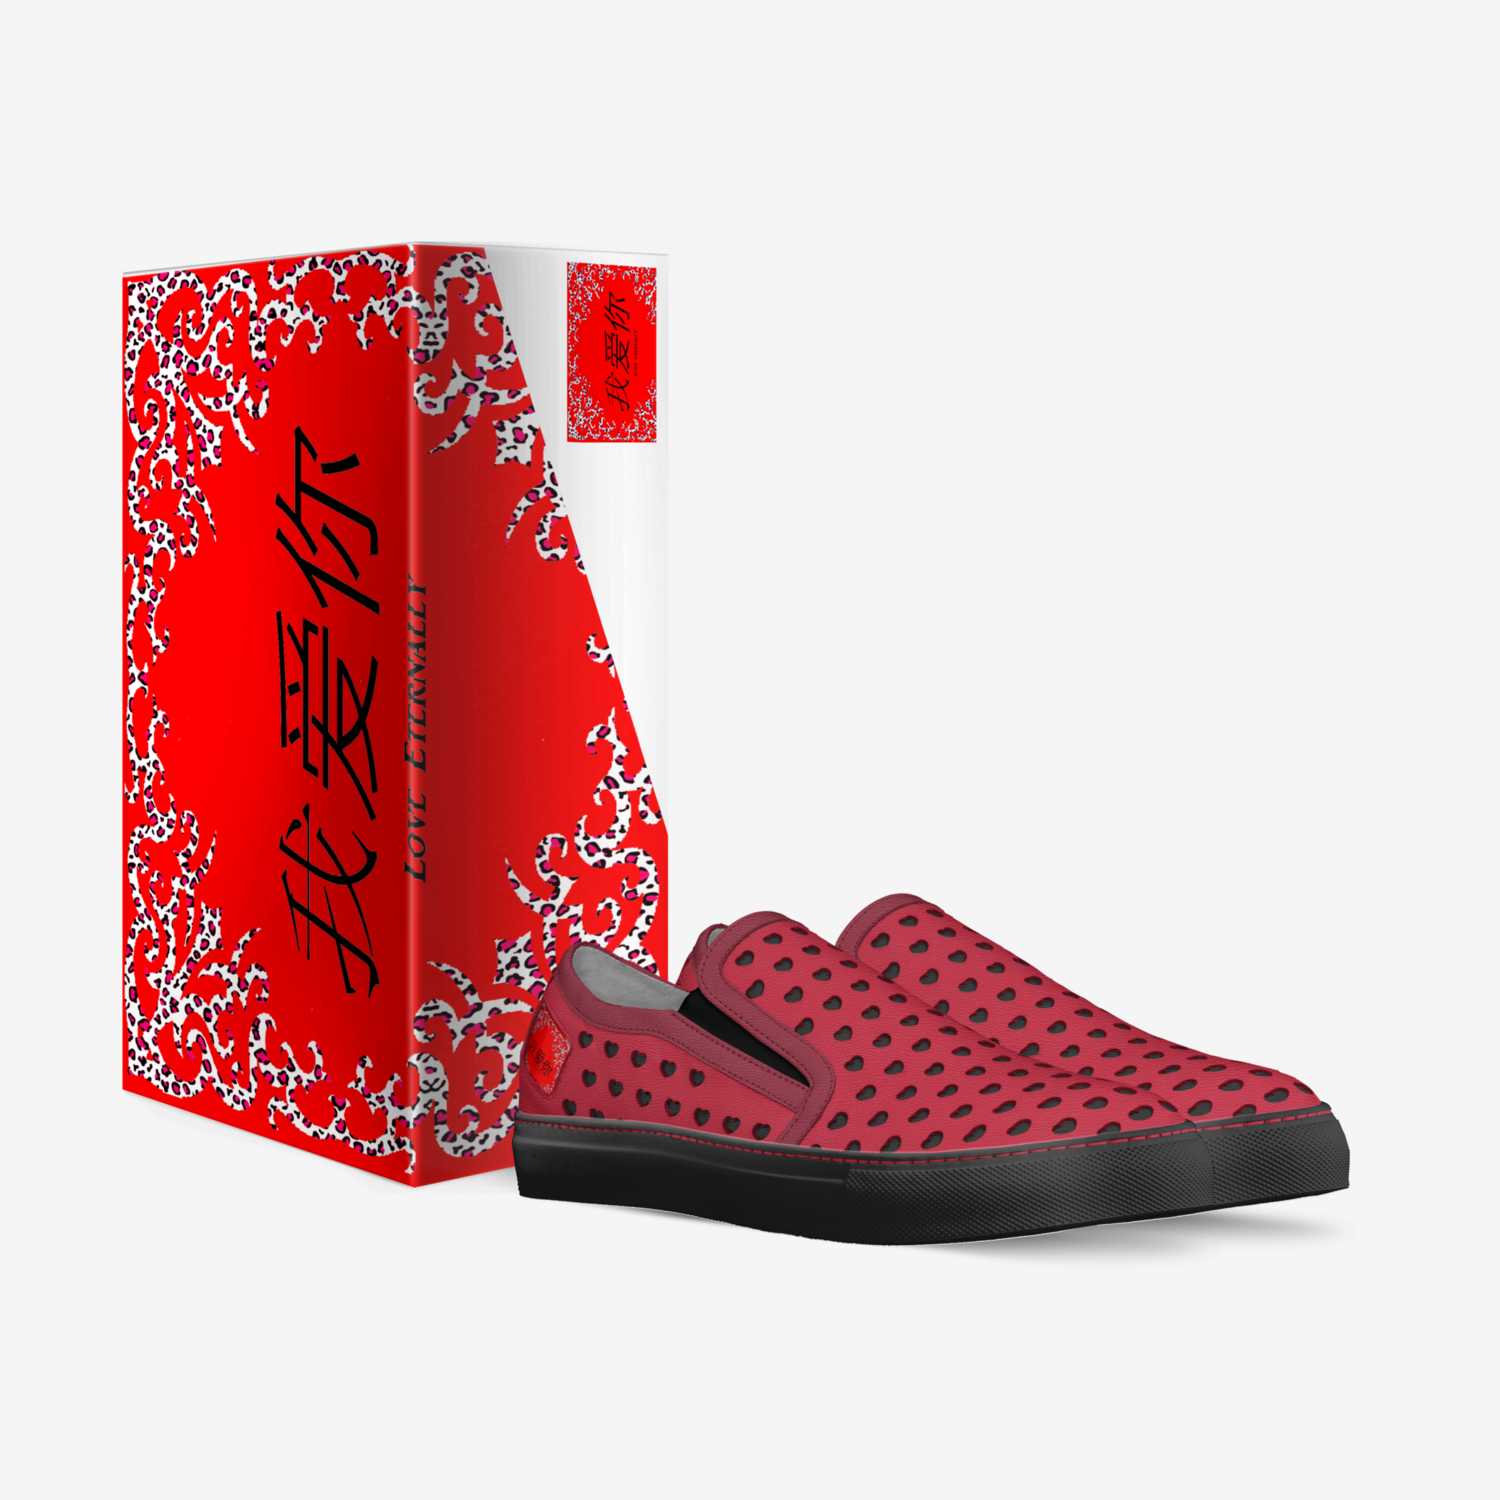 Wo Ai Ni Red custom made in Italy shoes by Aomoji Kei | Box view